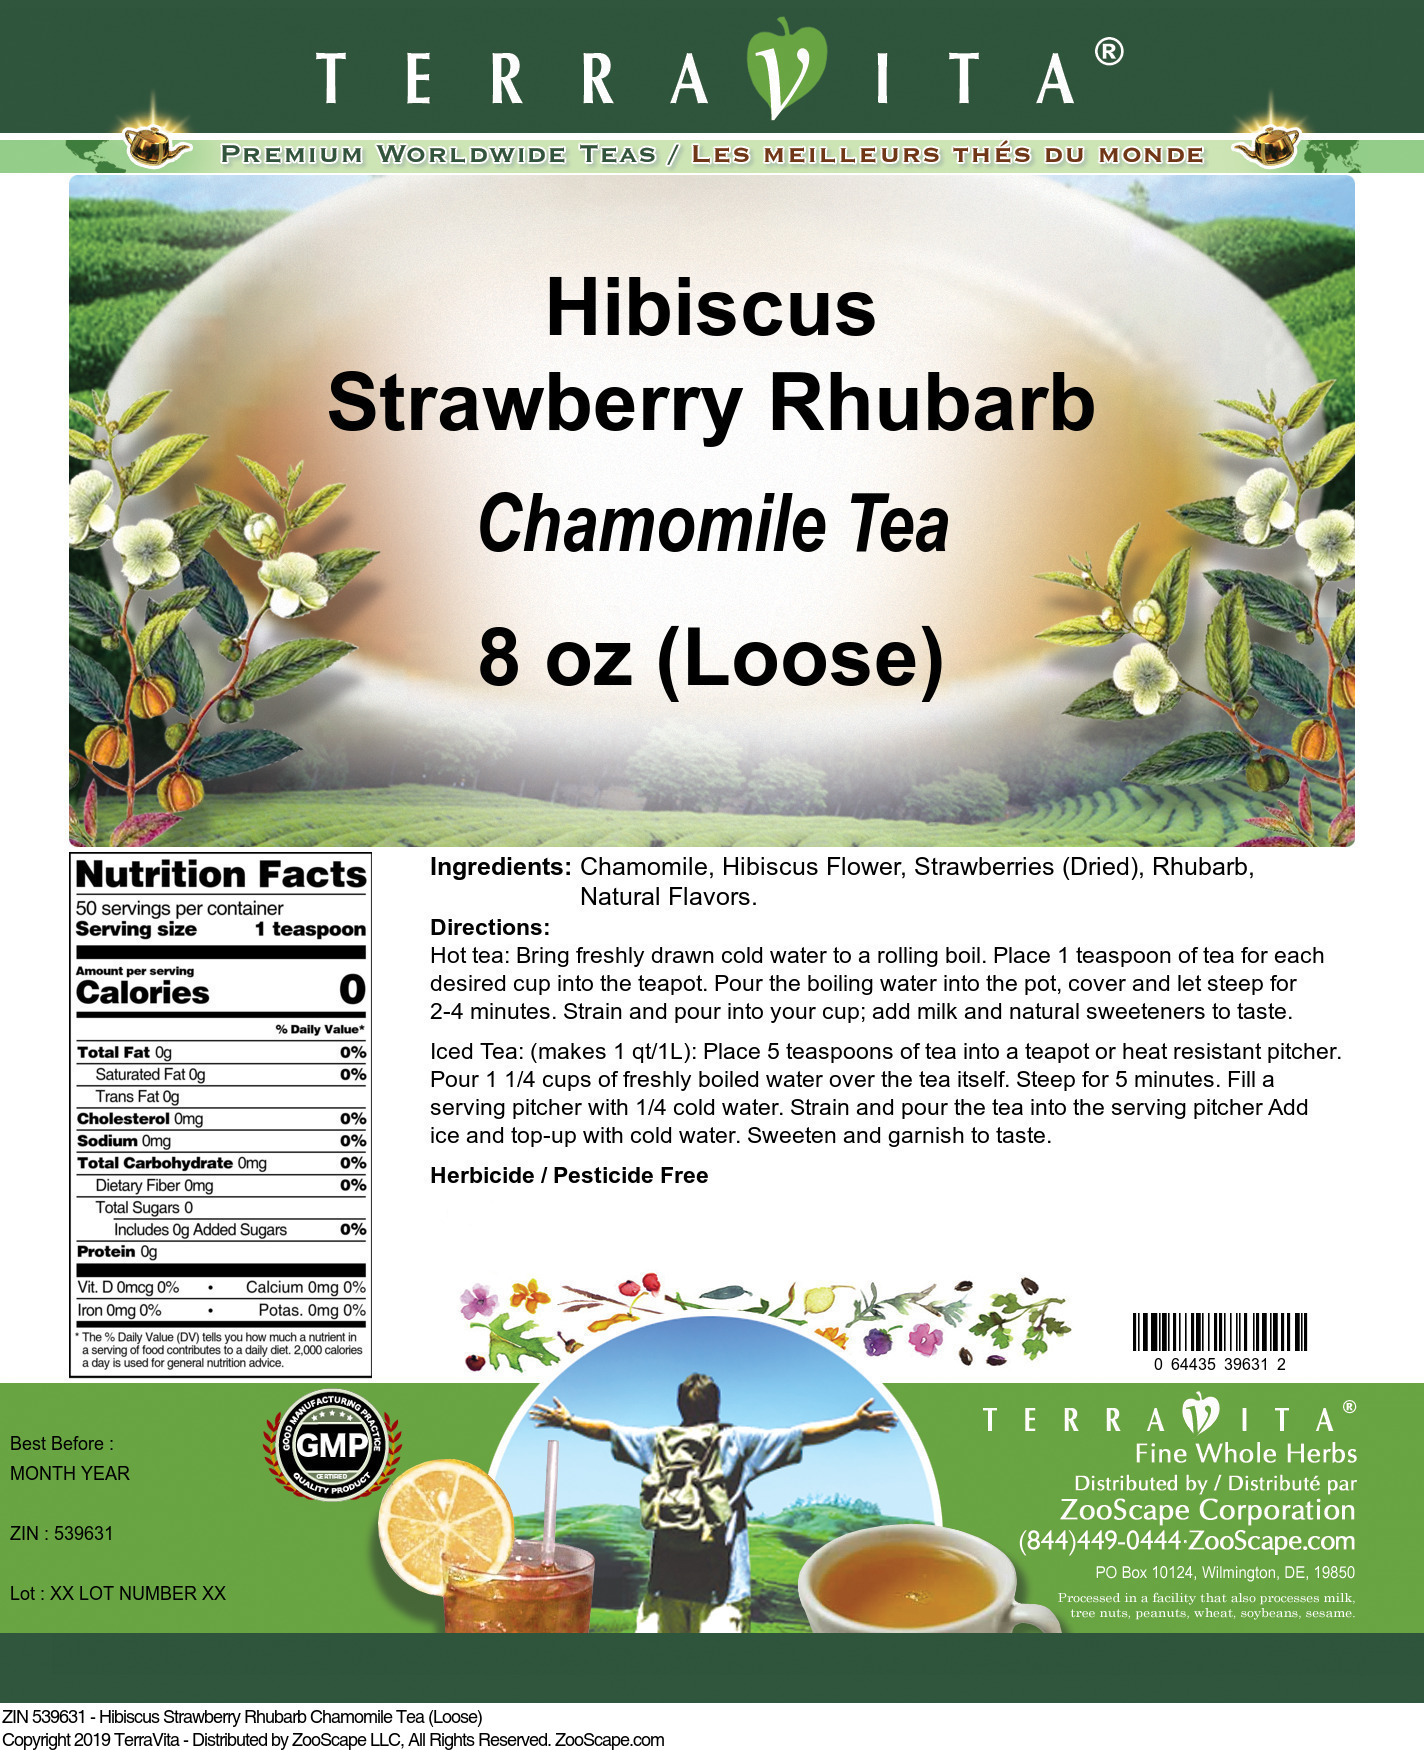 Hibiscus Strawberry Rhubarb Chamomile Tea (Loose) - Label